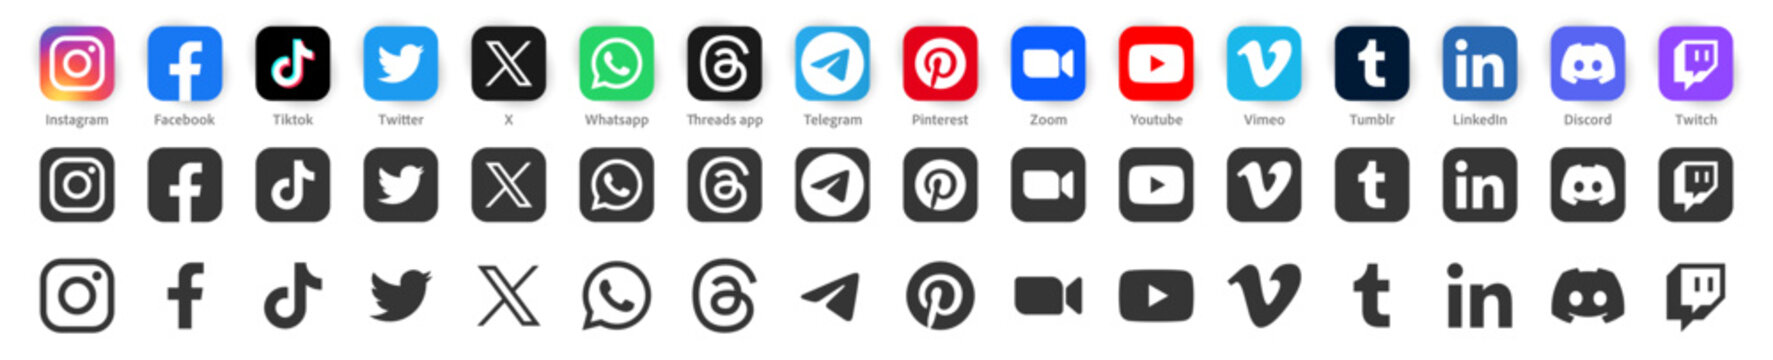 Social media icon logo vector set. Instagram, twitter, X, facebook, tiktok, threads app, discord, twitch. Popular social media icons button fit for web, mobile app